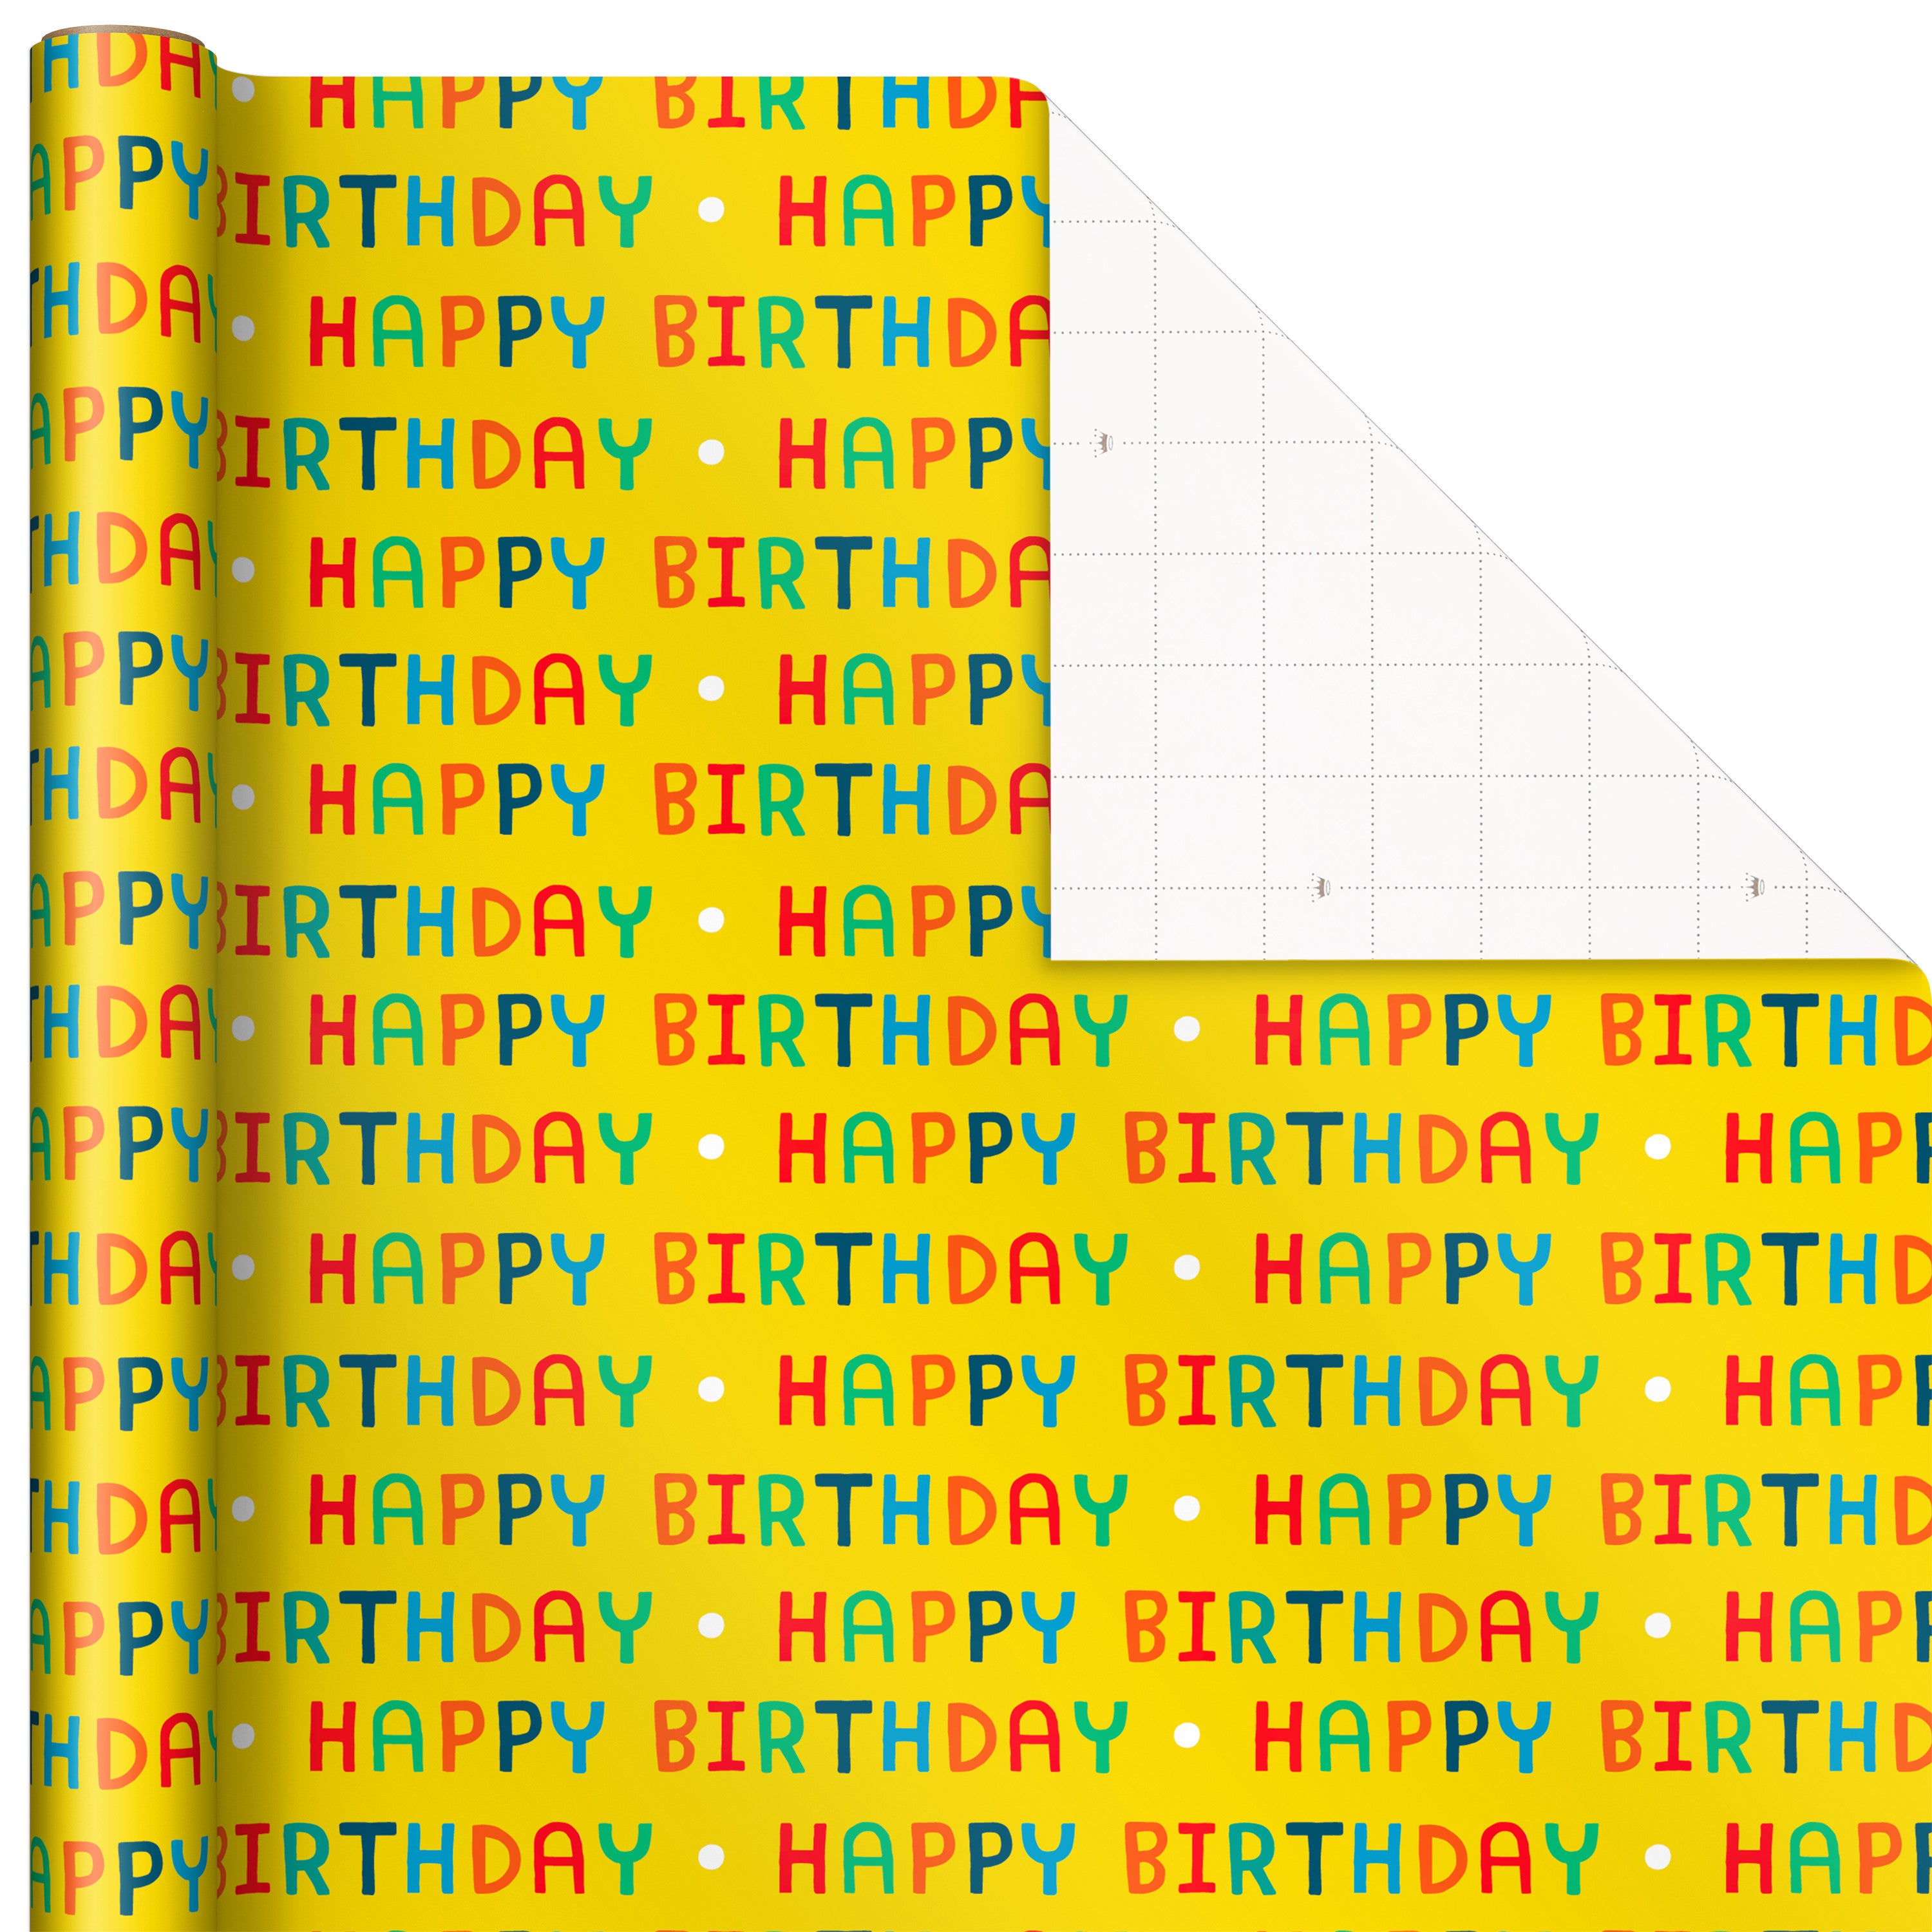 Kids Birthday Wrapping Paper (3 Rolls: 75 sq. ft. ttl) Pink Rainbows, Blue Dinosaurs, Yellow "Happy Birthday"